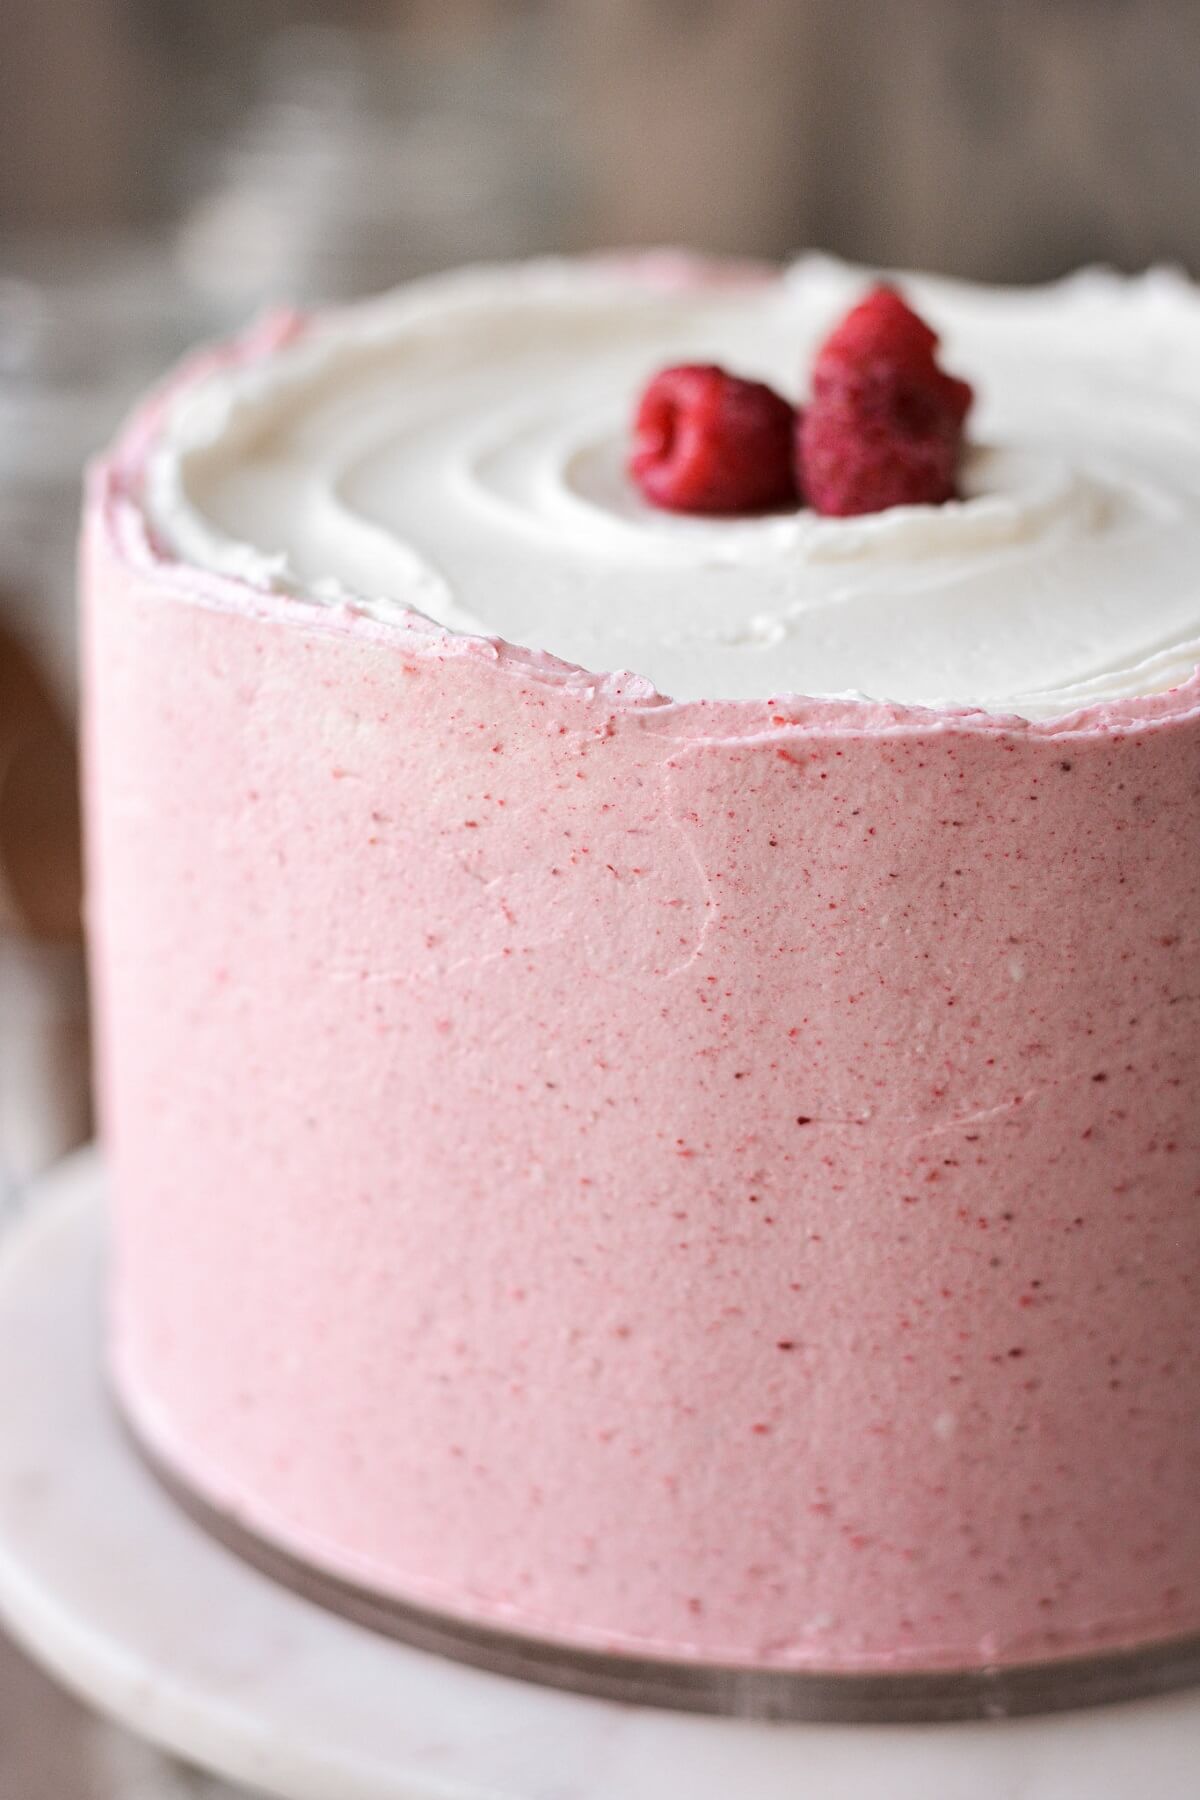 Raspberry vanilla cake topped with raspberries.